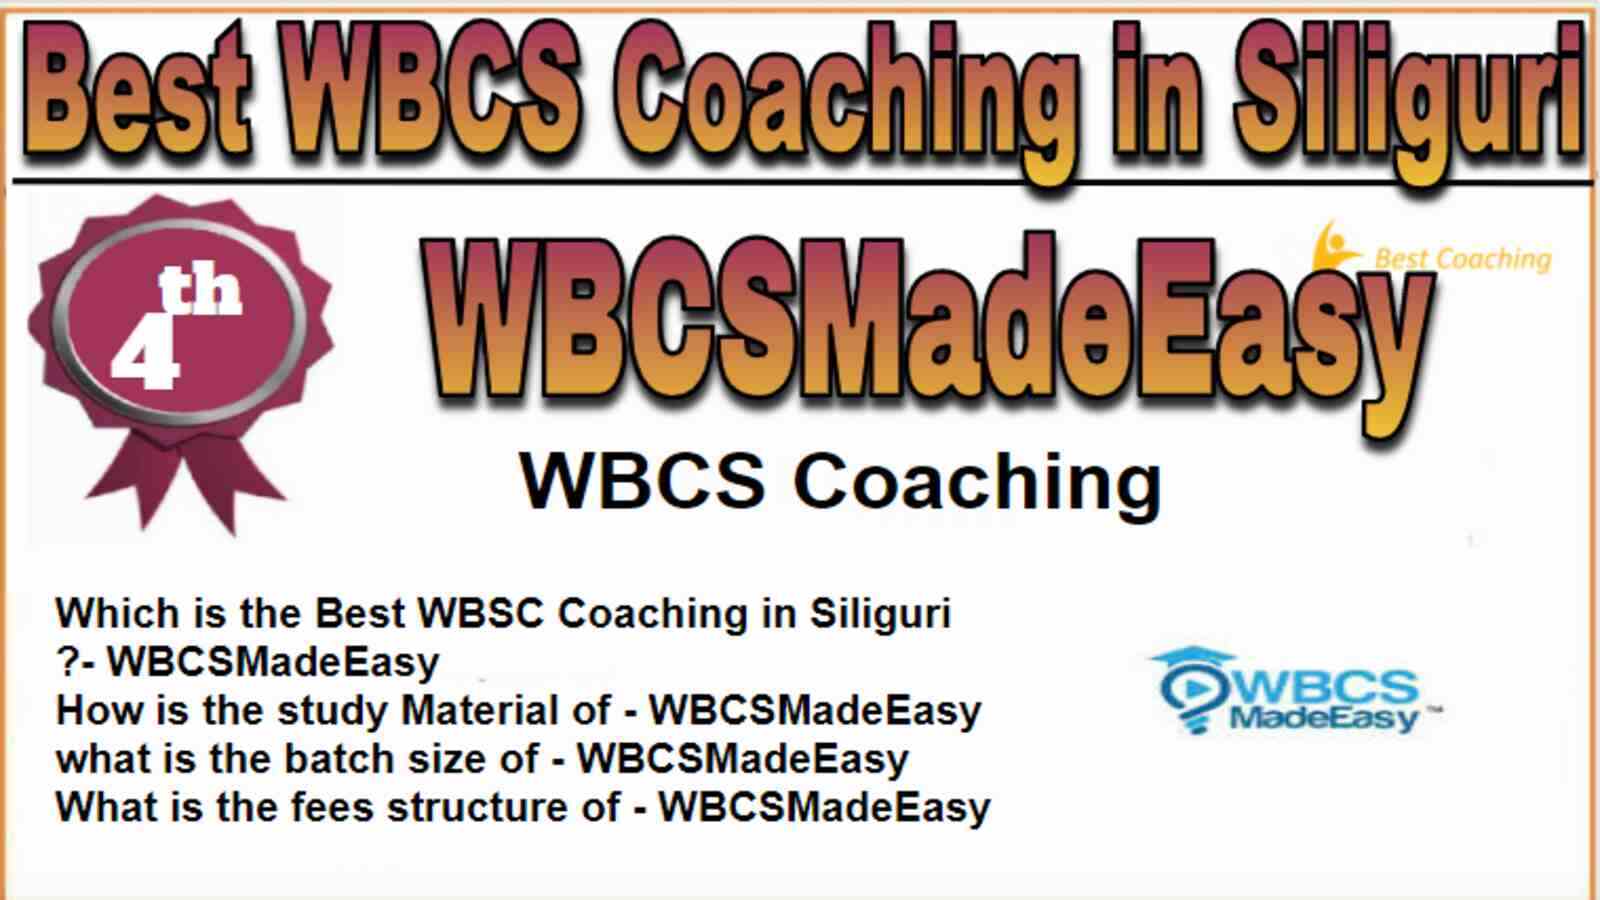 Rank 4 Best WBCS Coaching in Siliguri